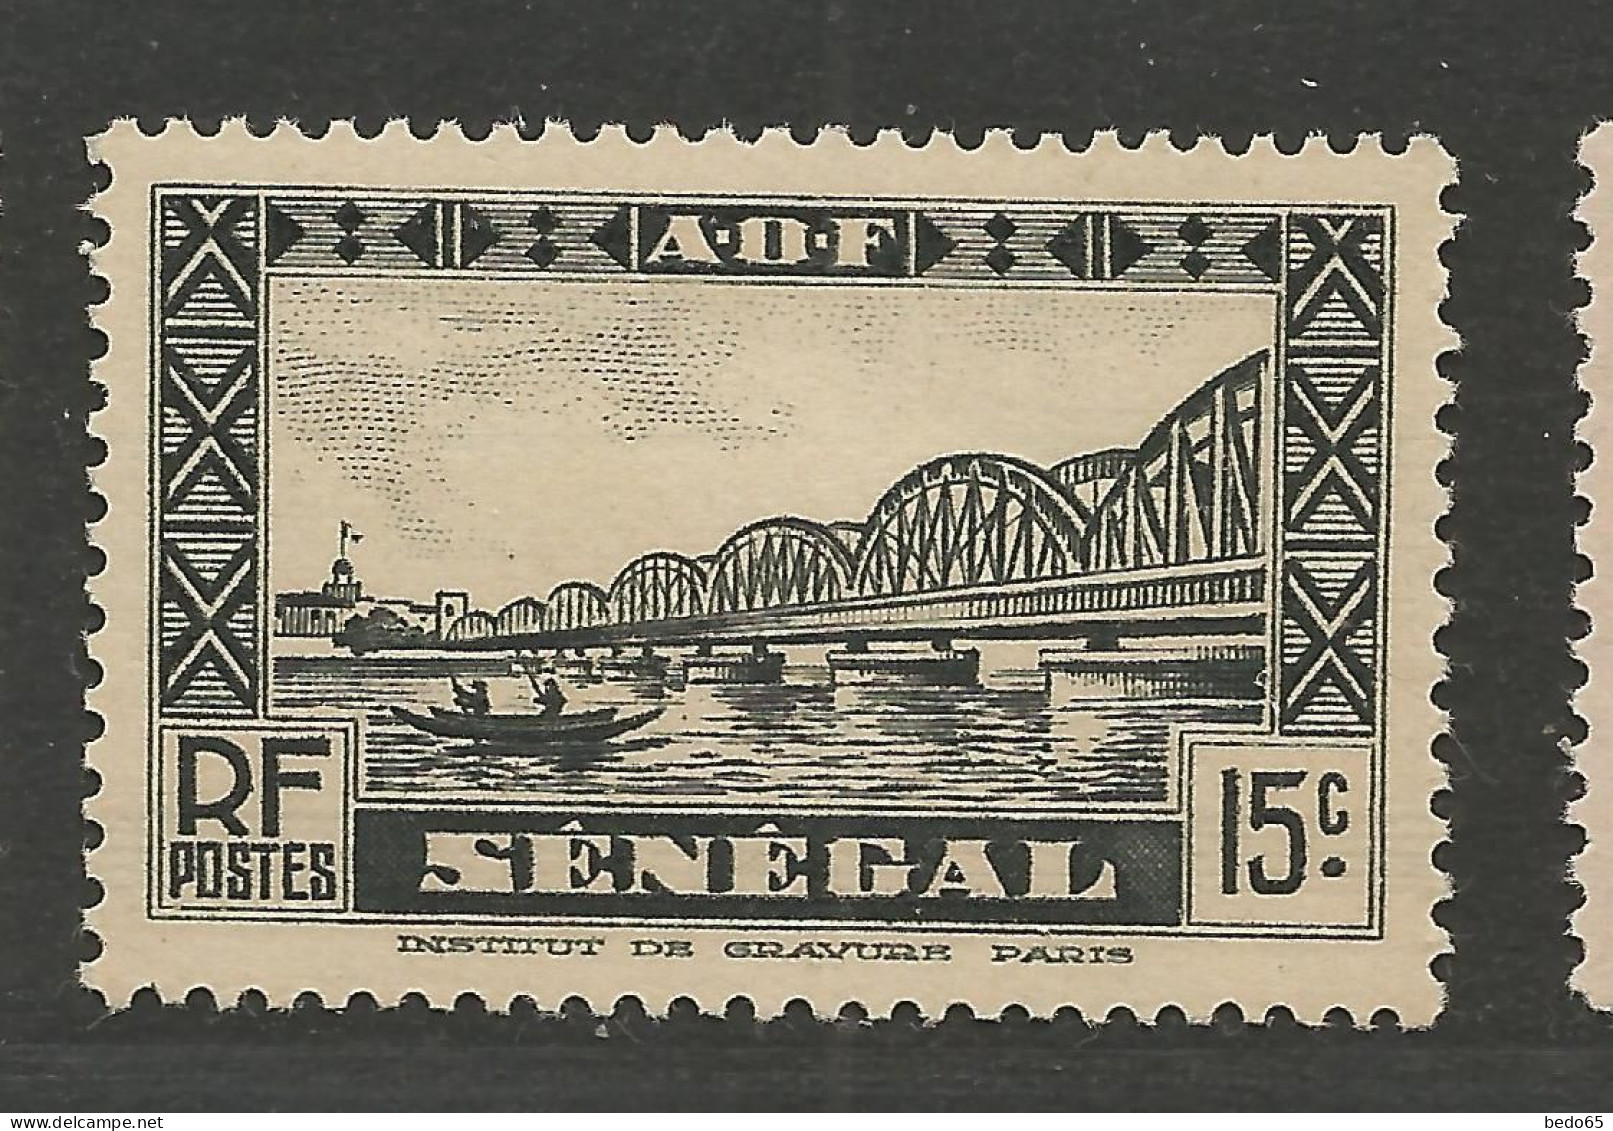 SENEGAL  N° 119 NEUF** LUXE  SANS CHARNIERE  / Hingeless  / MNH - Unused Stamps